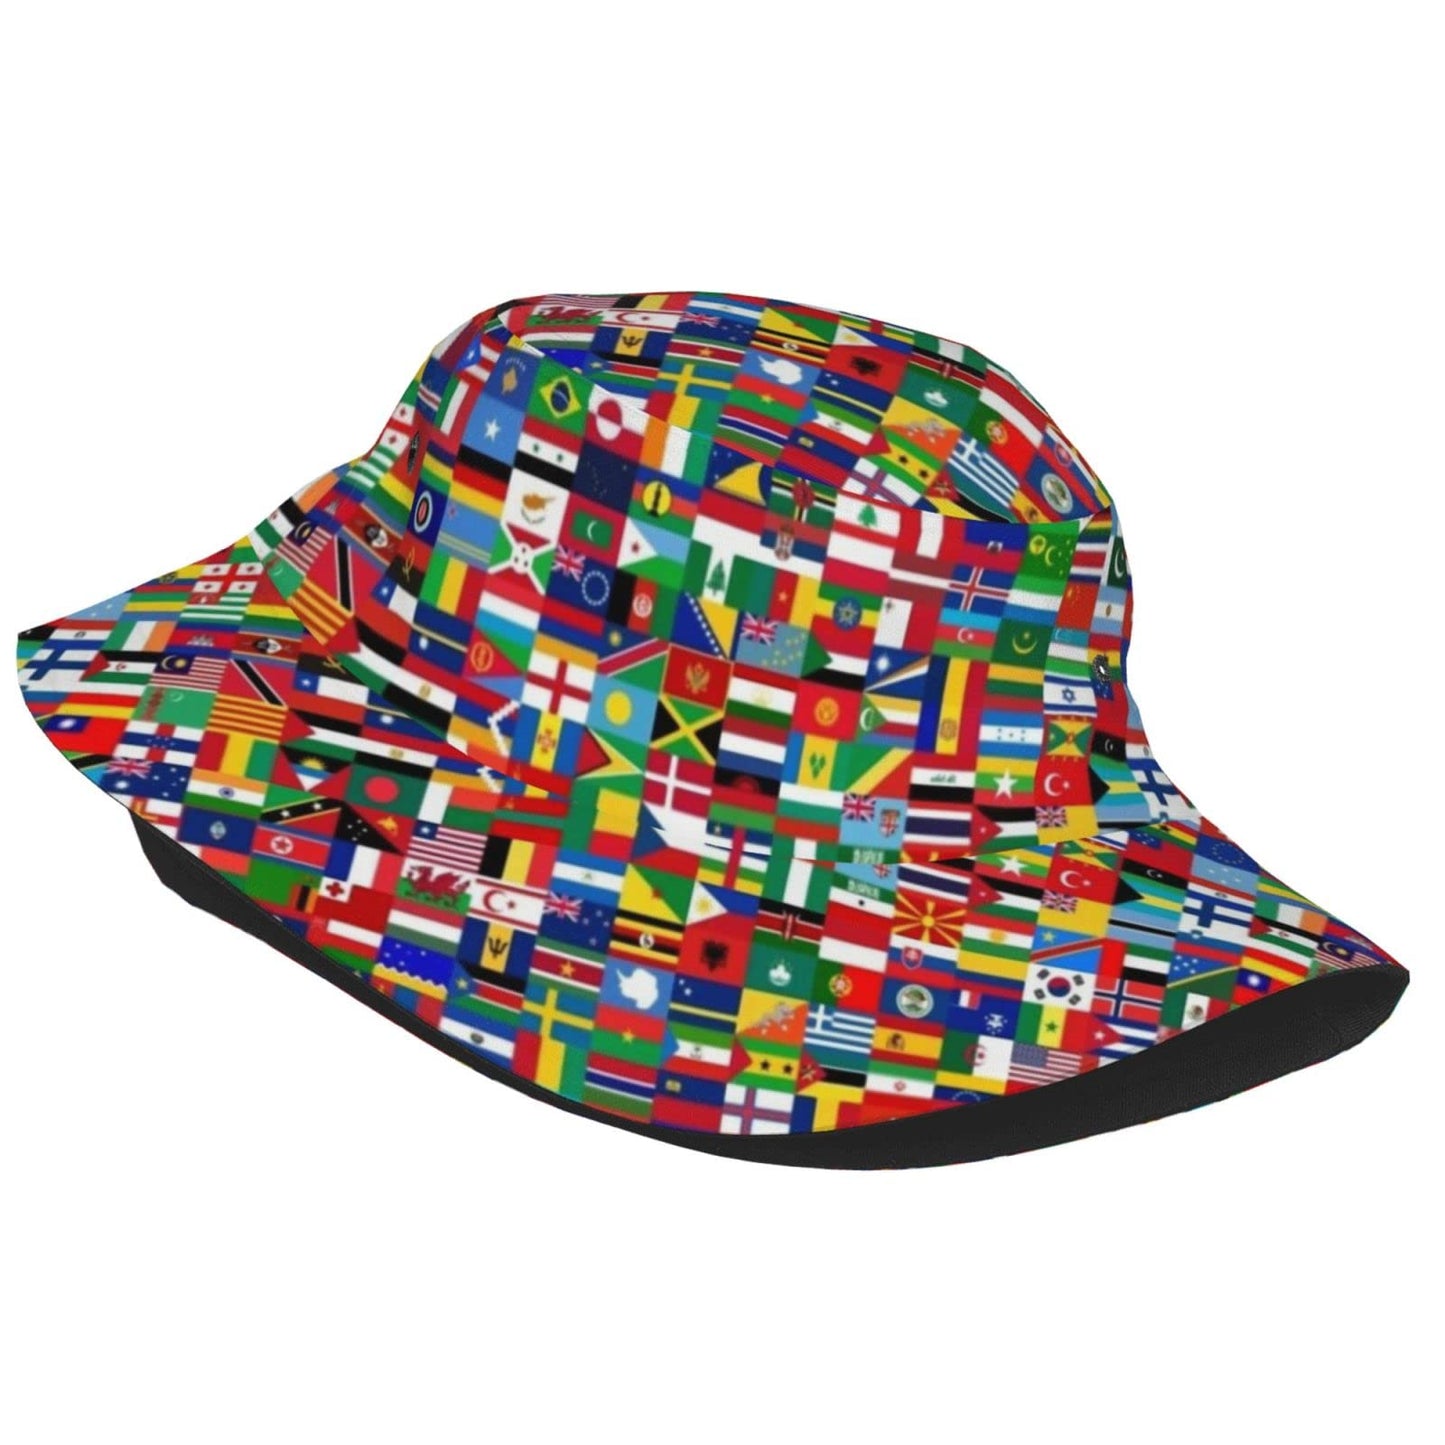 The World Flag Bucket Hat Beach Cap